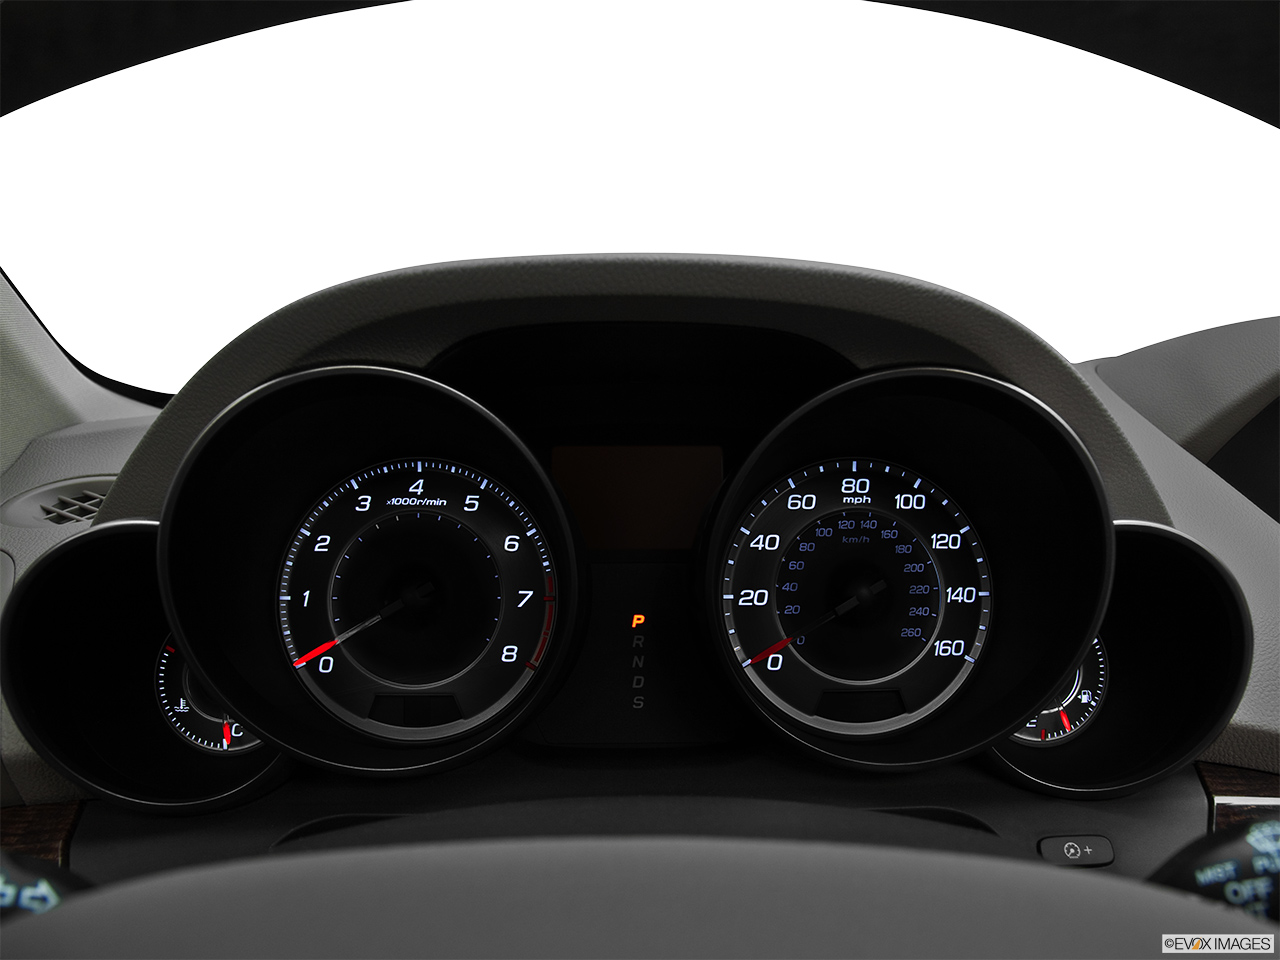 2011 Acura MDX MDX Speedometer/tachometer. 